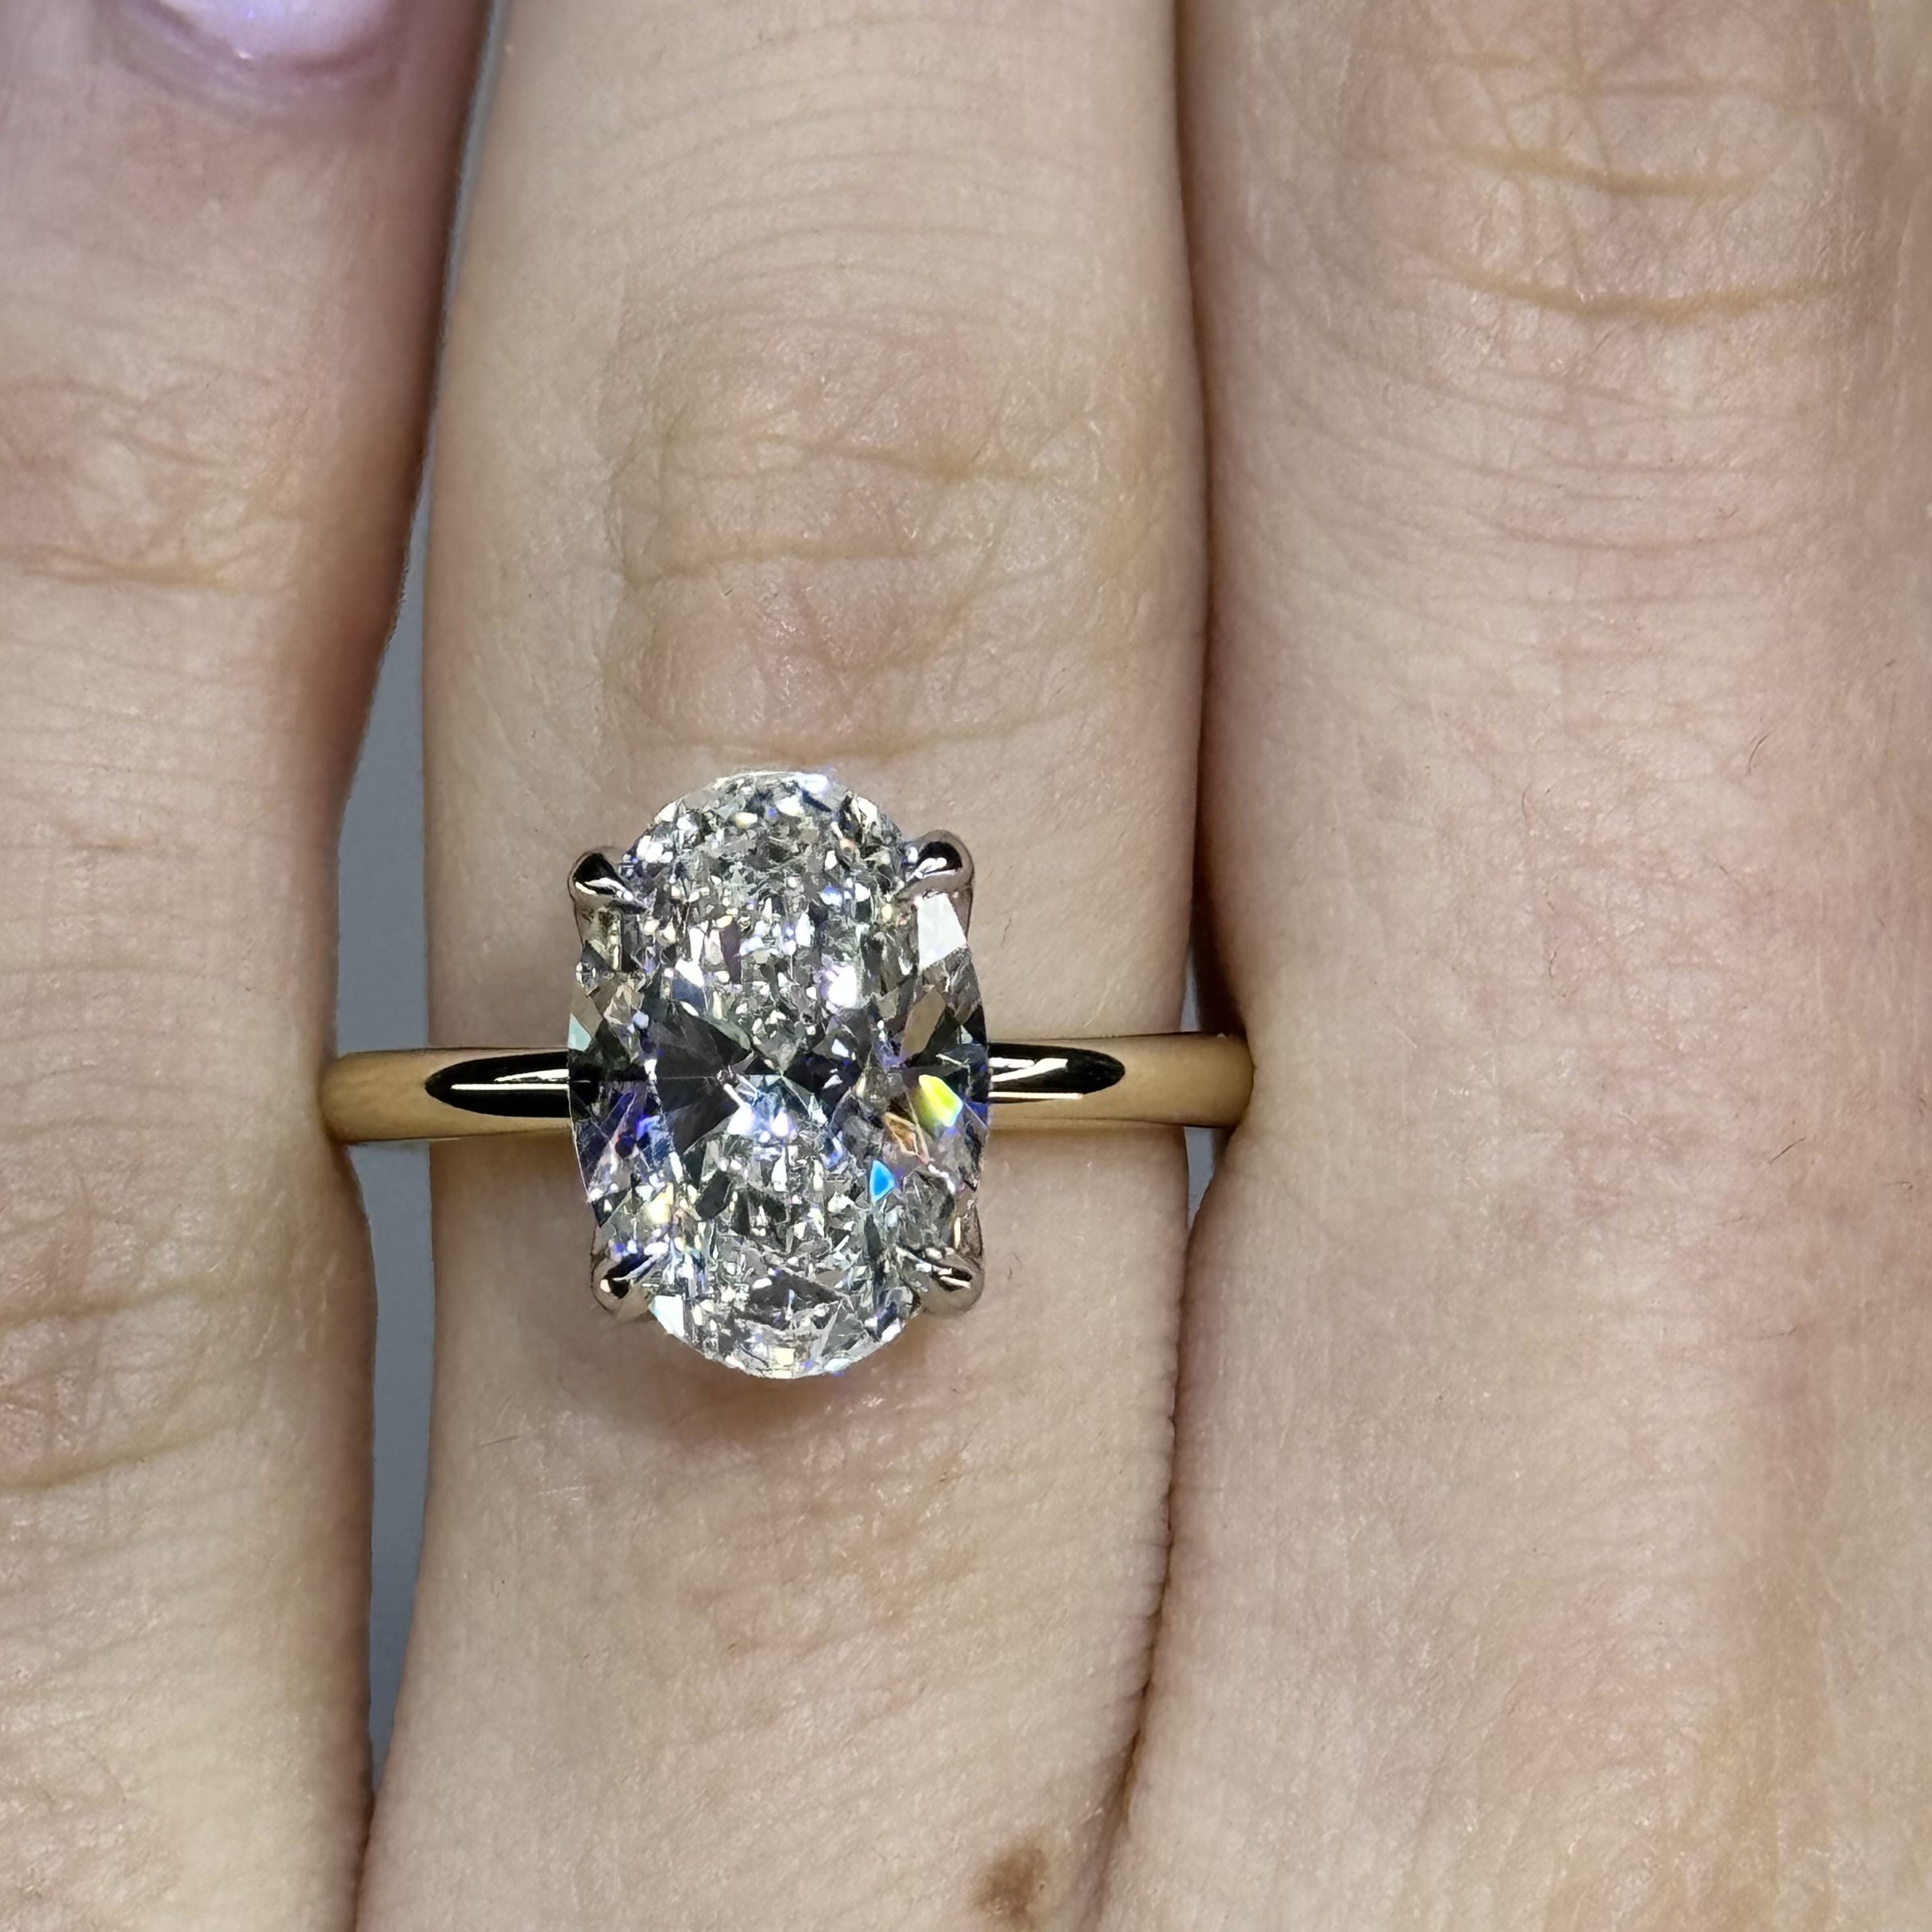 GIA 3.51 E VS1 Oval "April" Engagement Ring Image 2 Forever Diamonds New York, NY